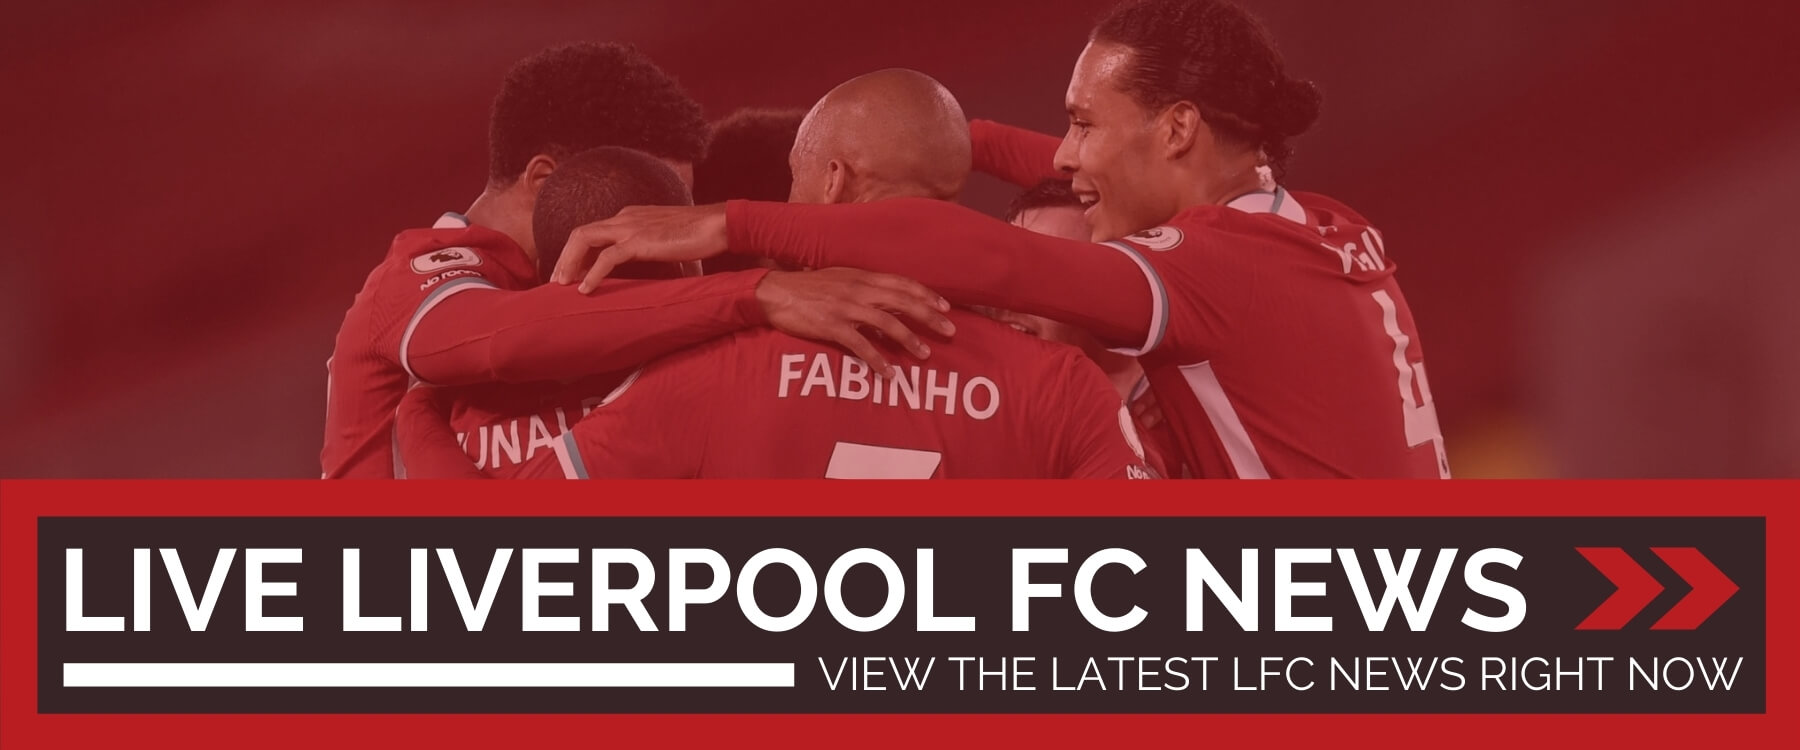 Live Liverpool FC News